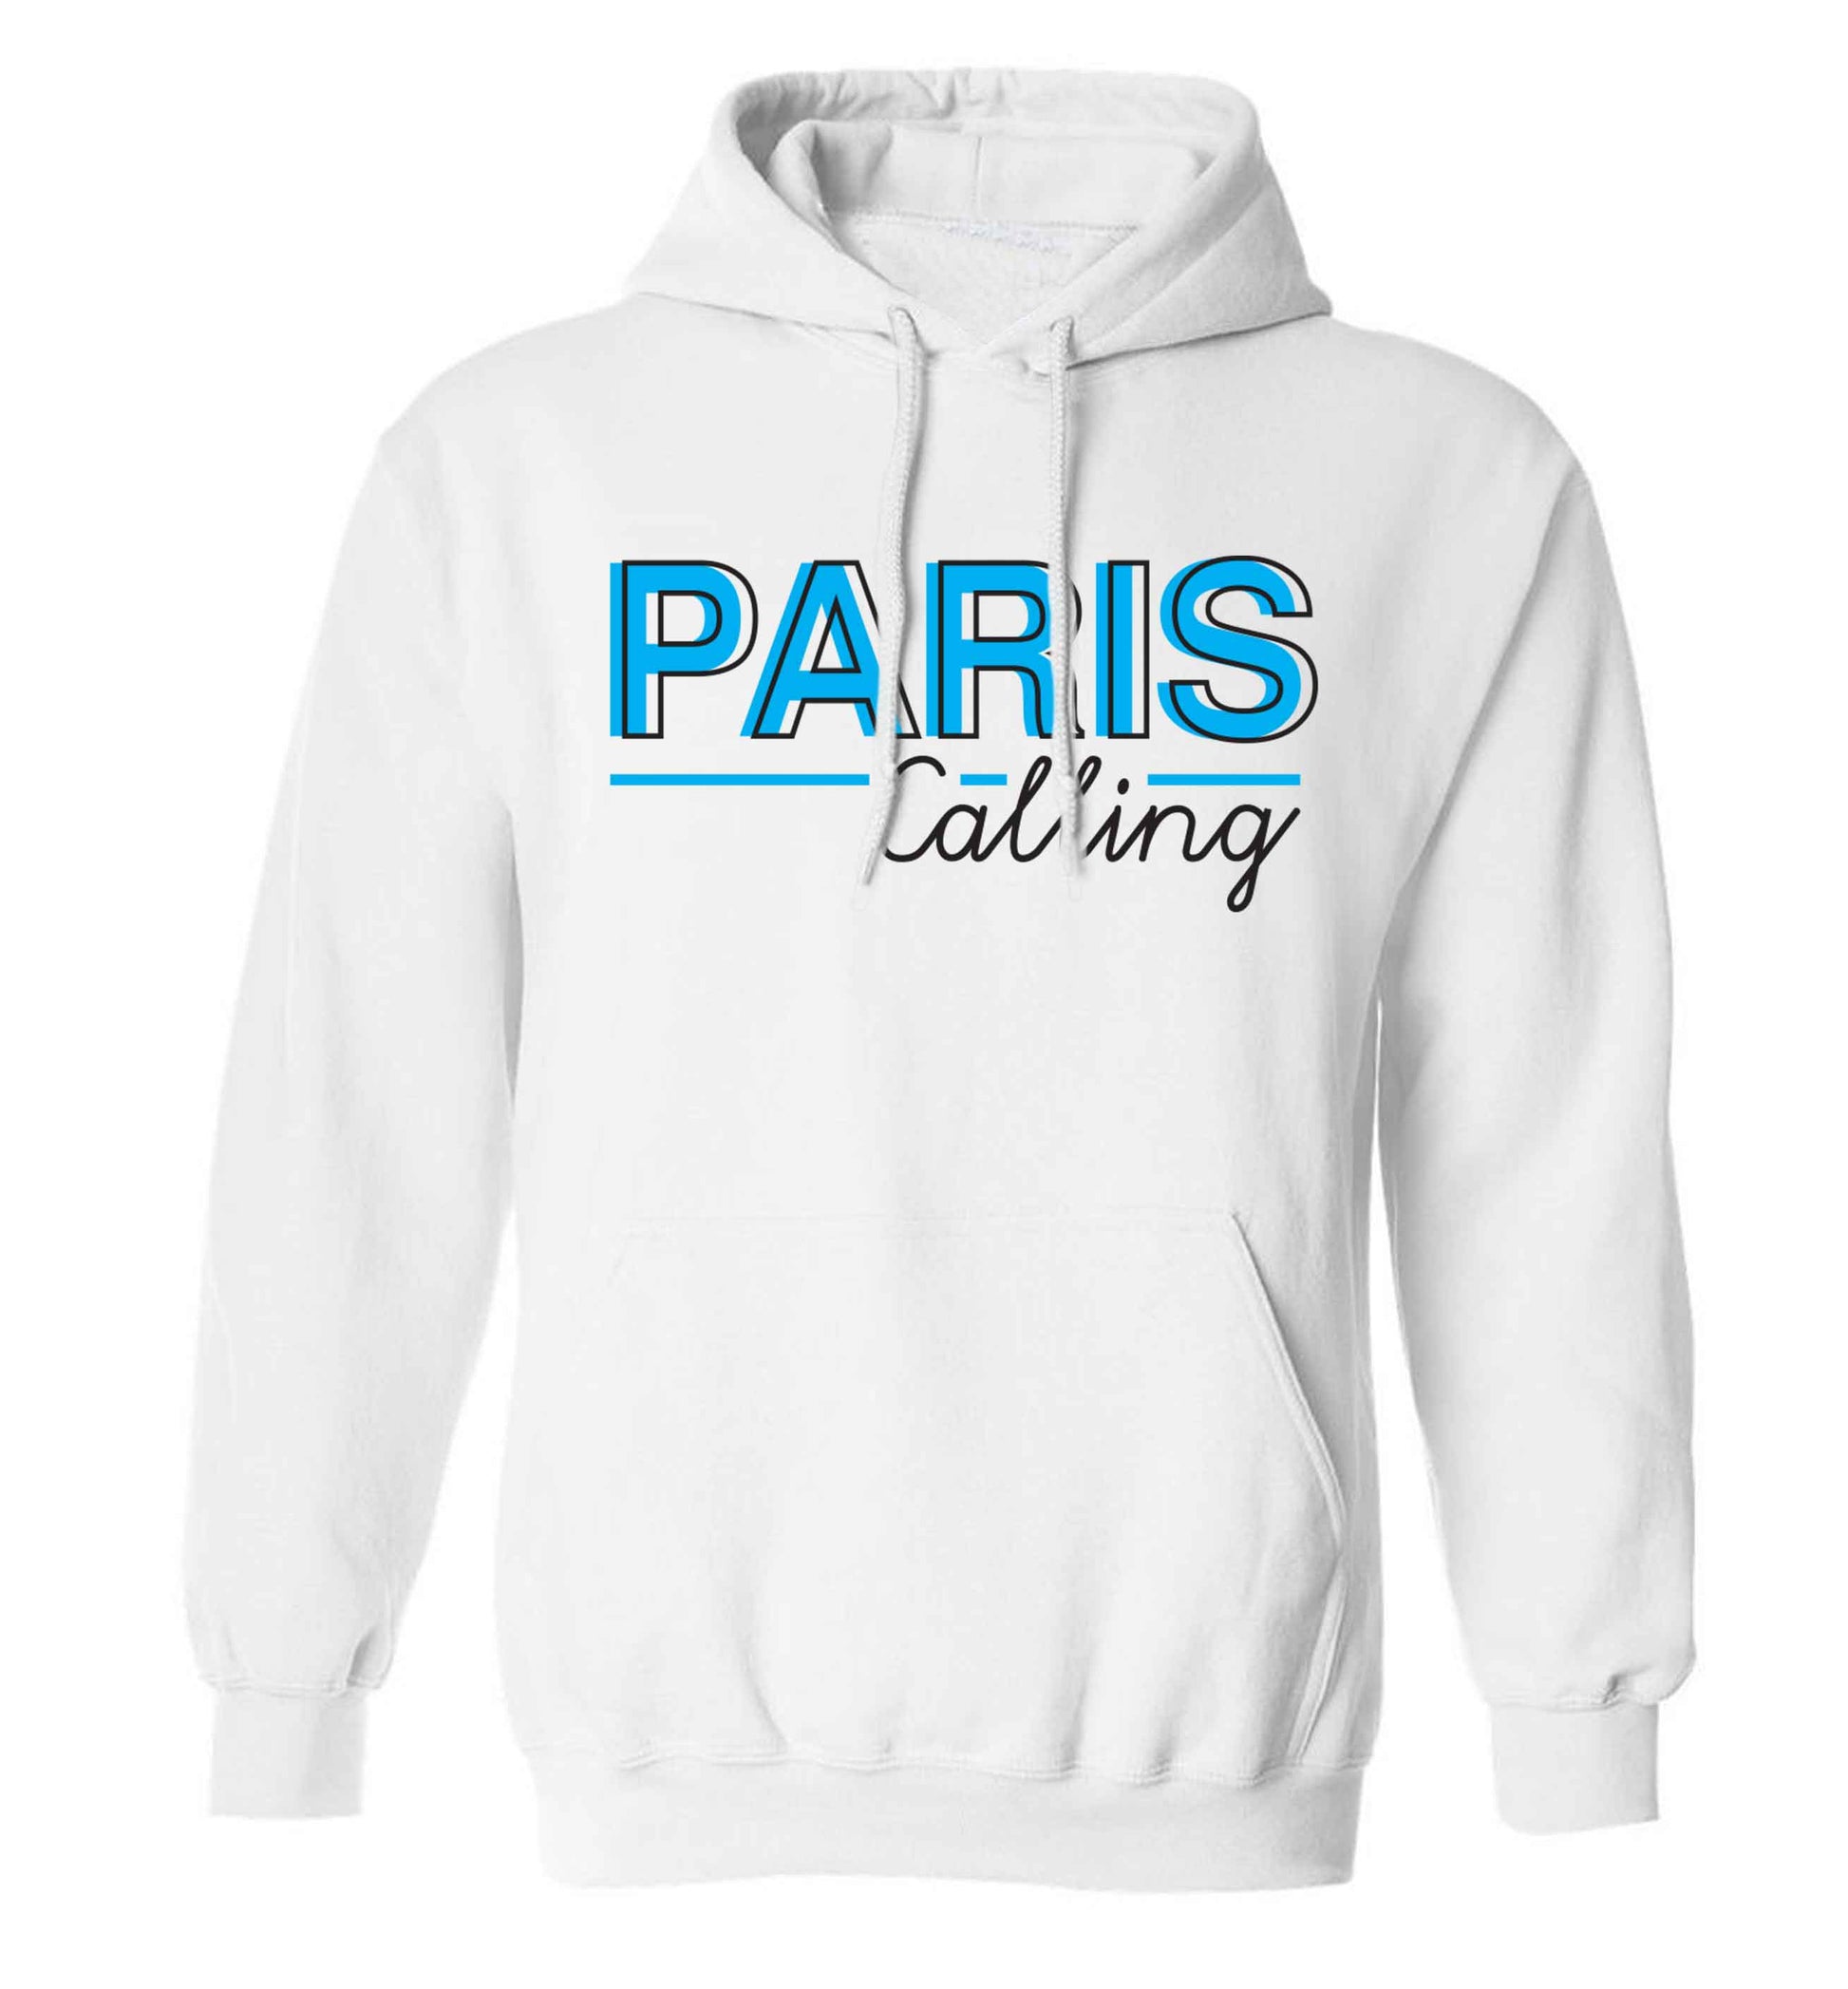 Paris calling adults unisex white hoodie 2XL